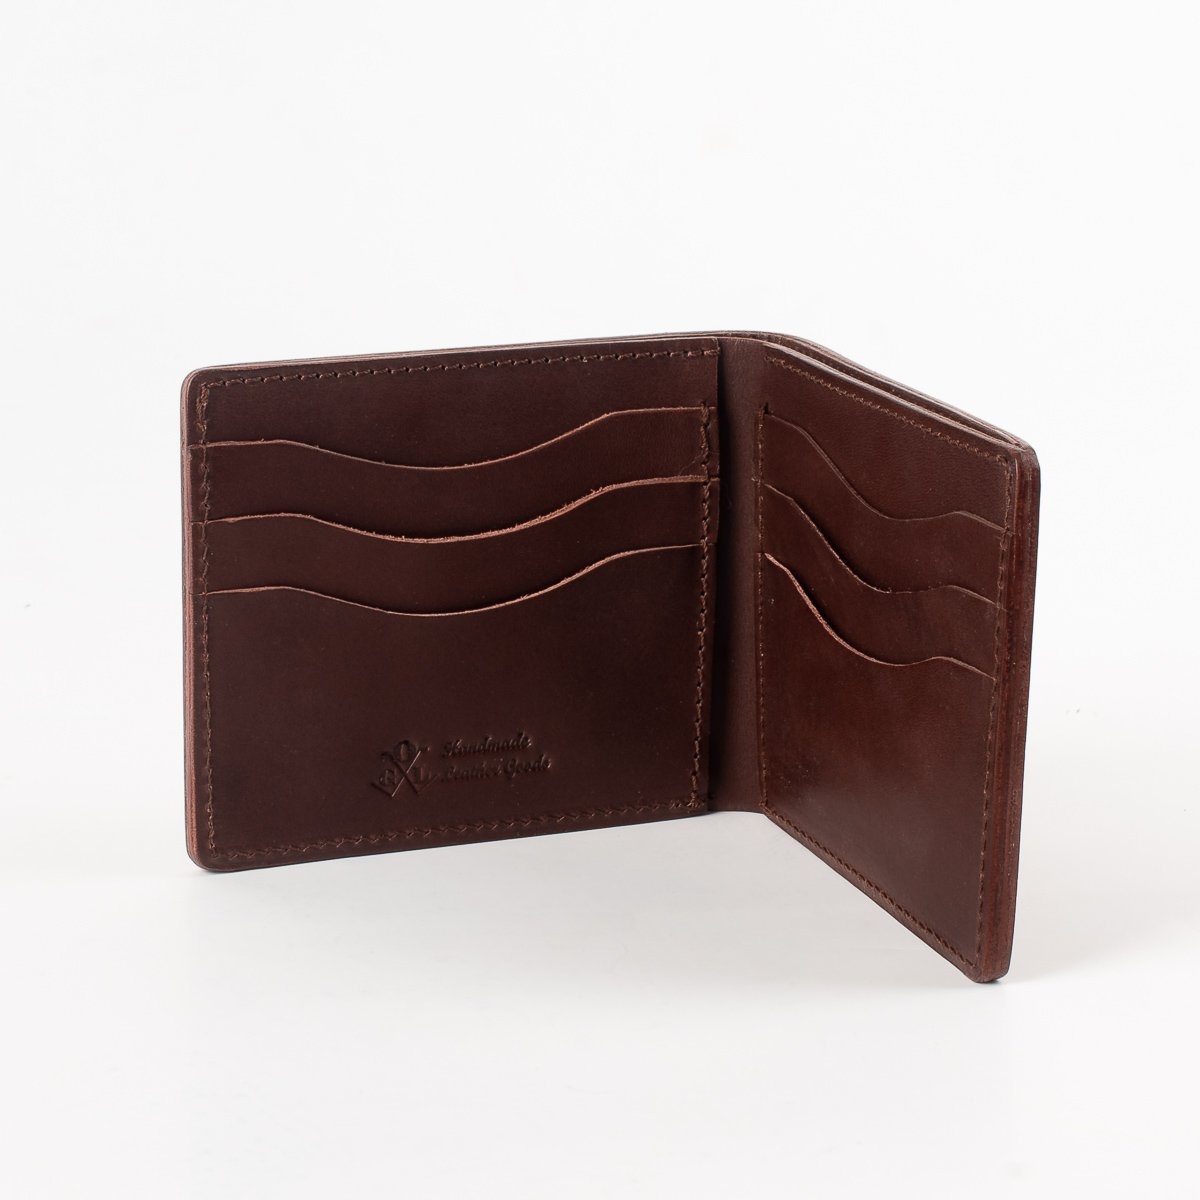 OGL-KINGSMAN-BF OGL Kingsman Classic Bi Fold Wallet - Black, Brown or Tan - 11